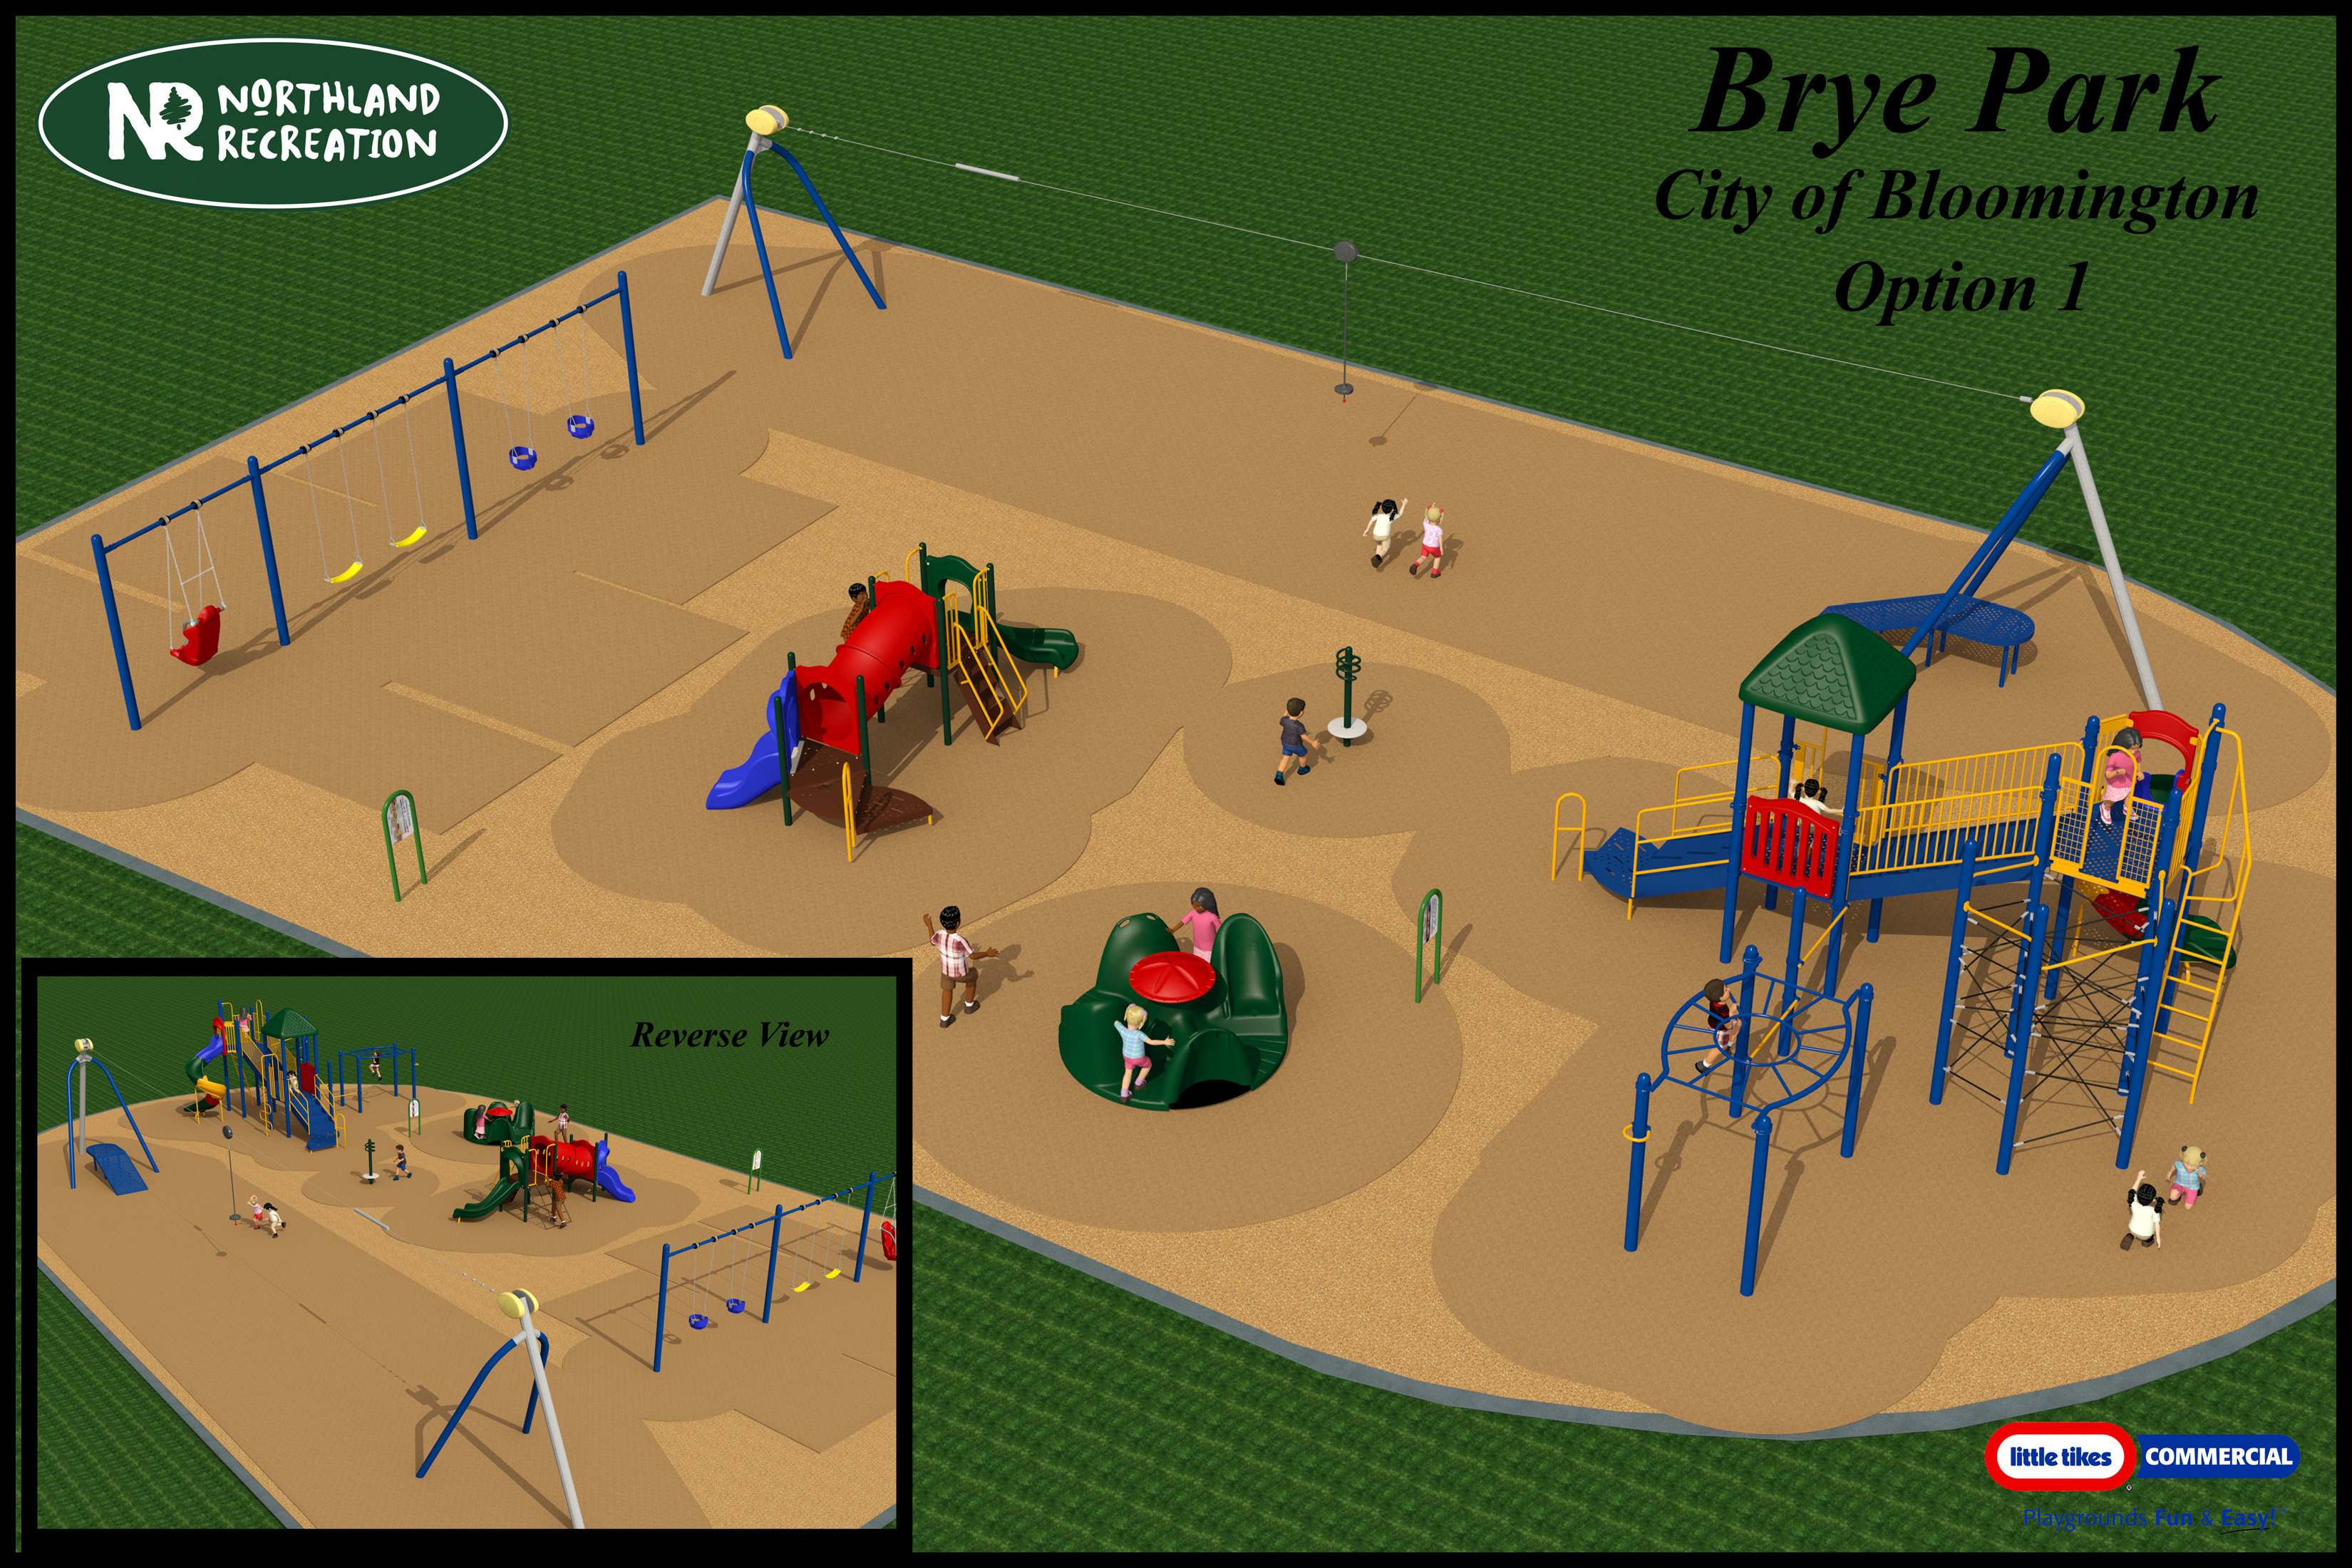 Brye Park option 1